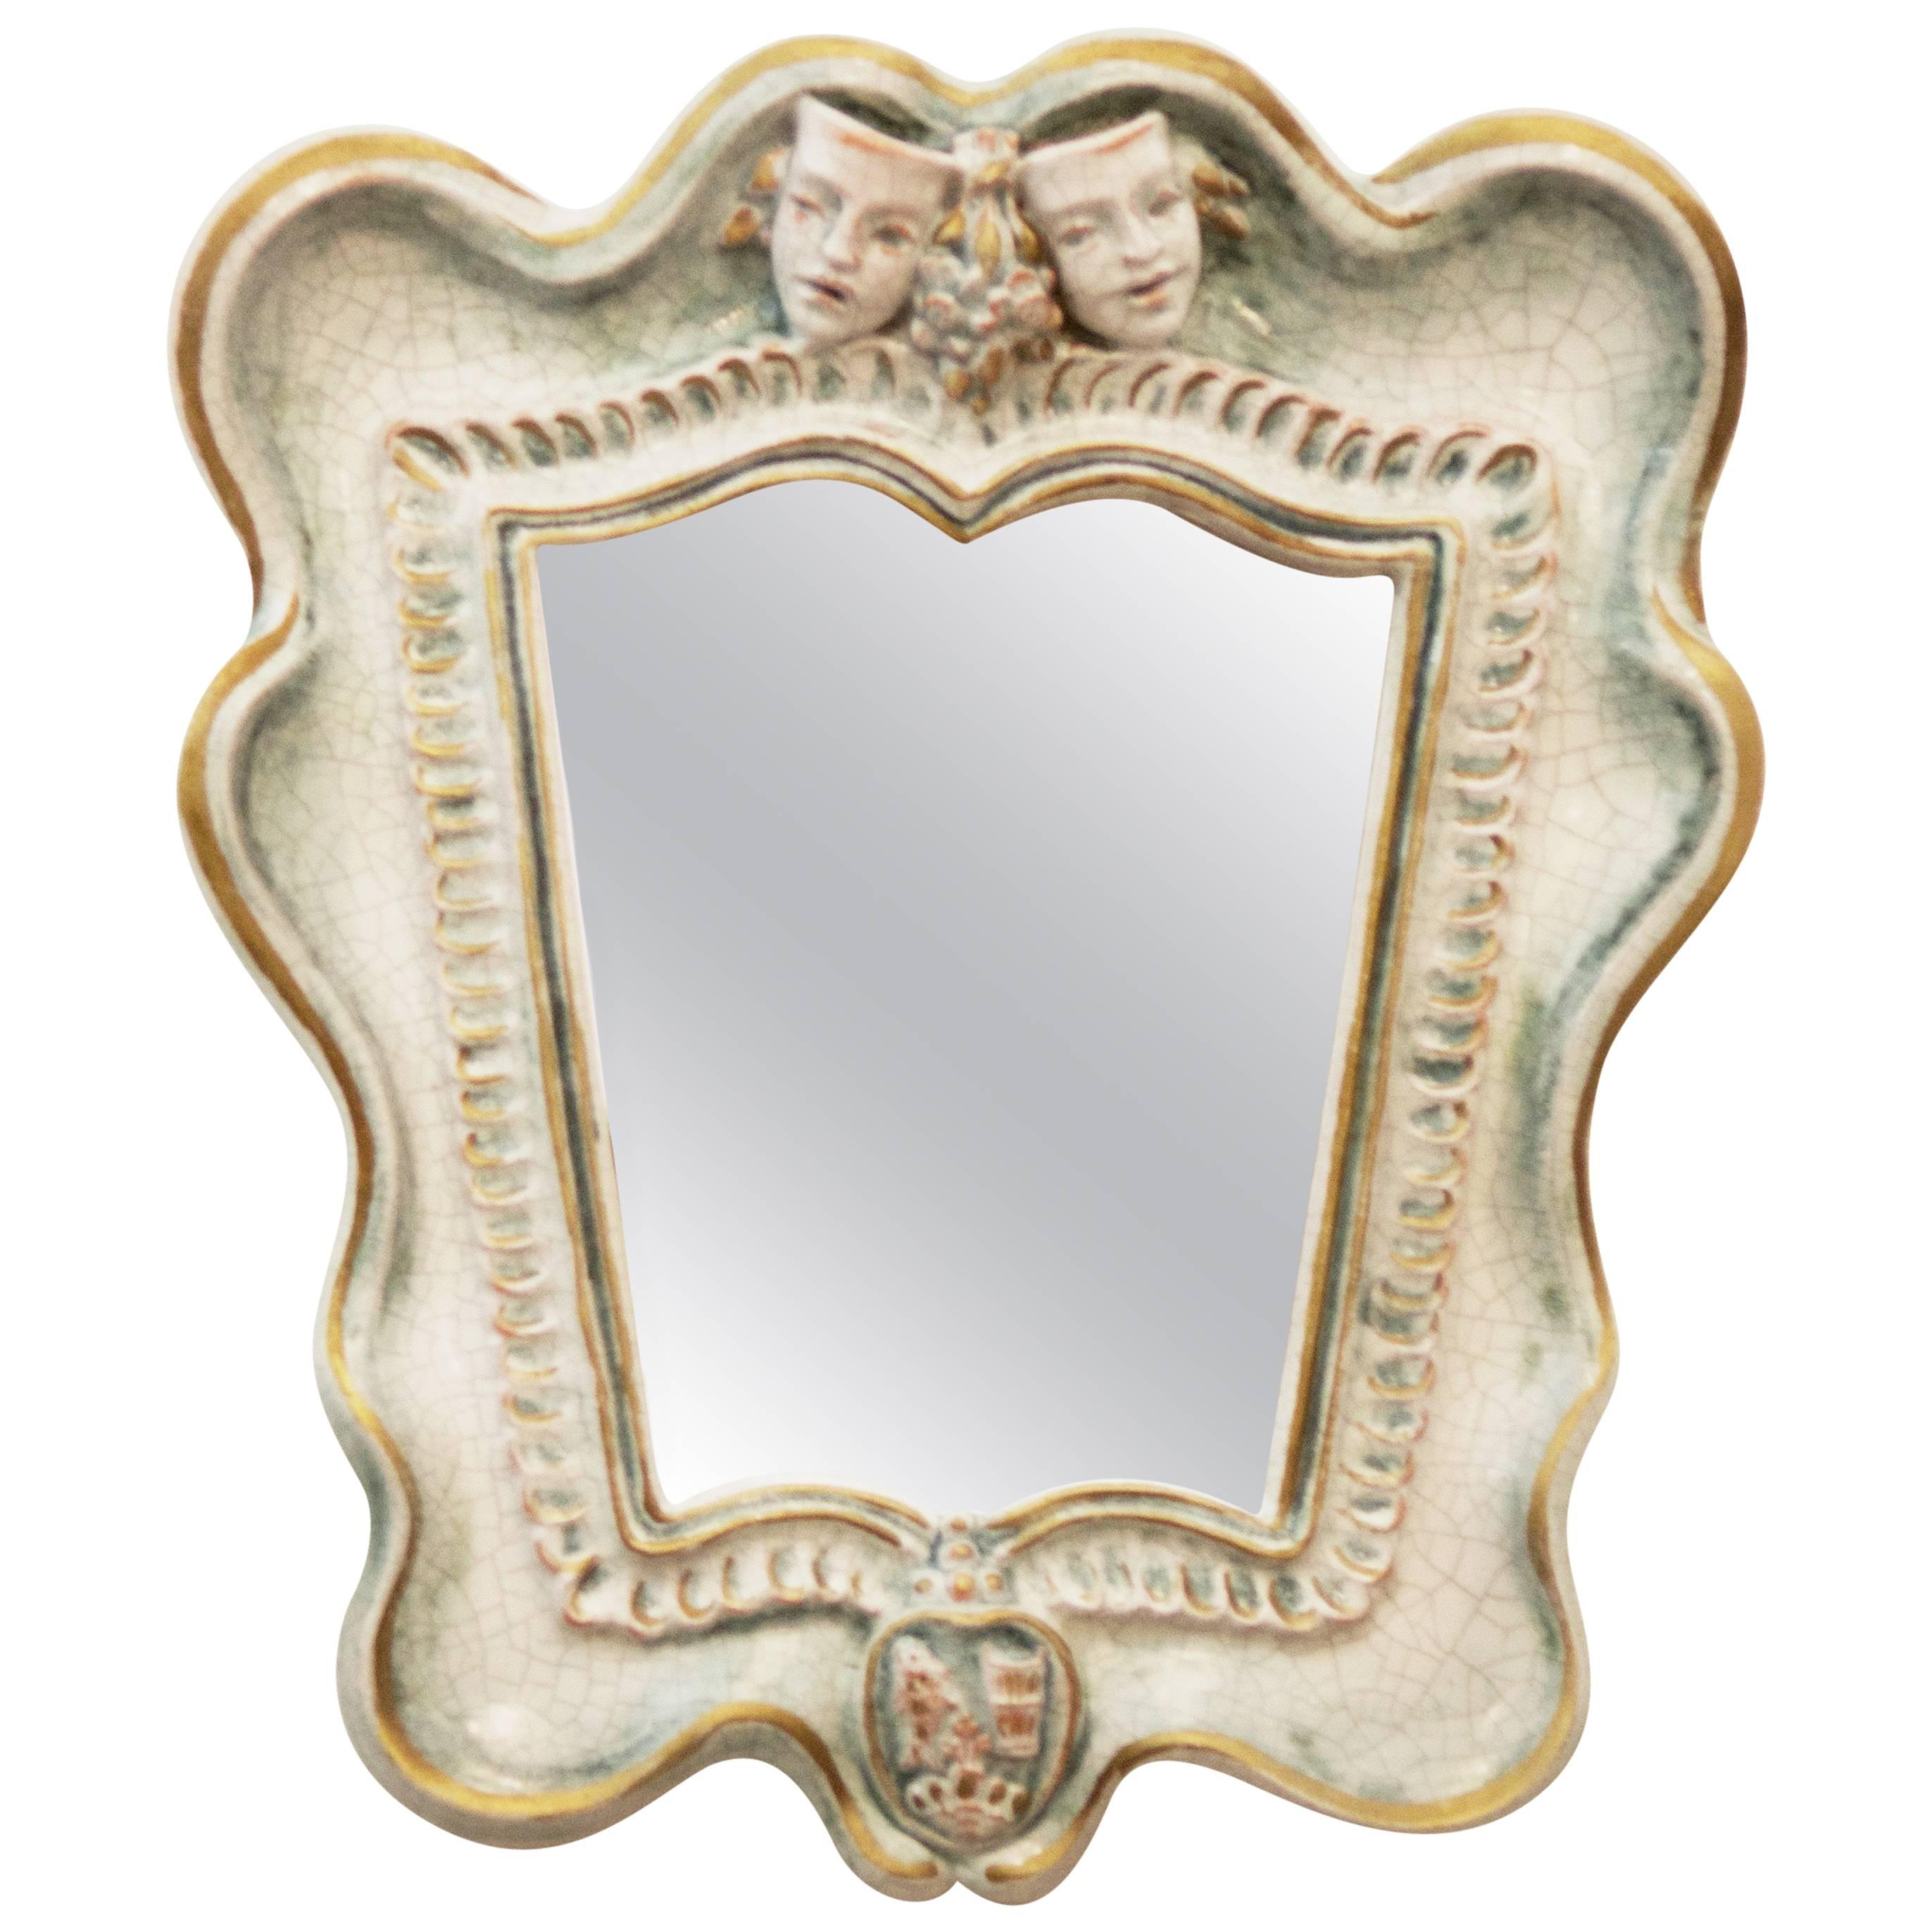 Art Deco Ceramik Wall Mirror by "Gmundner Keramik" Model 2140 For Sale